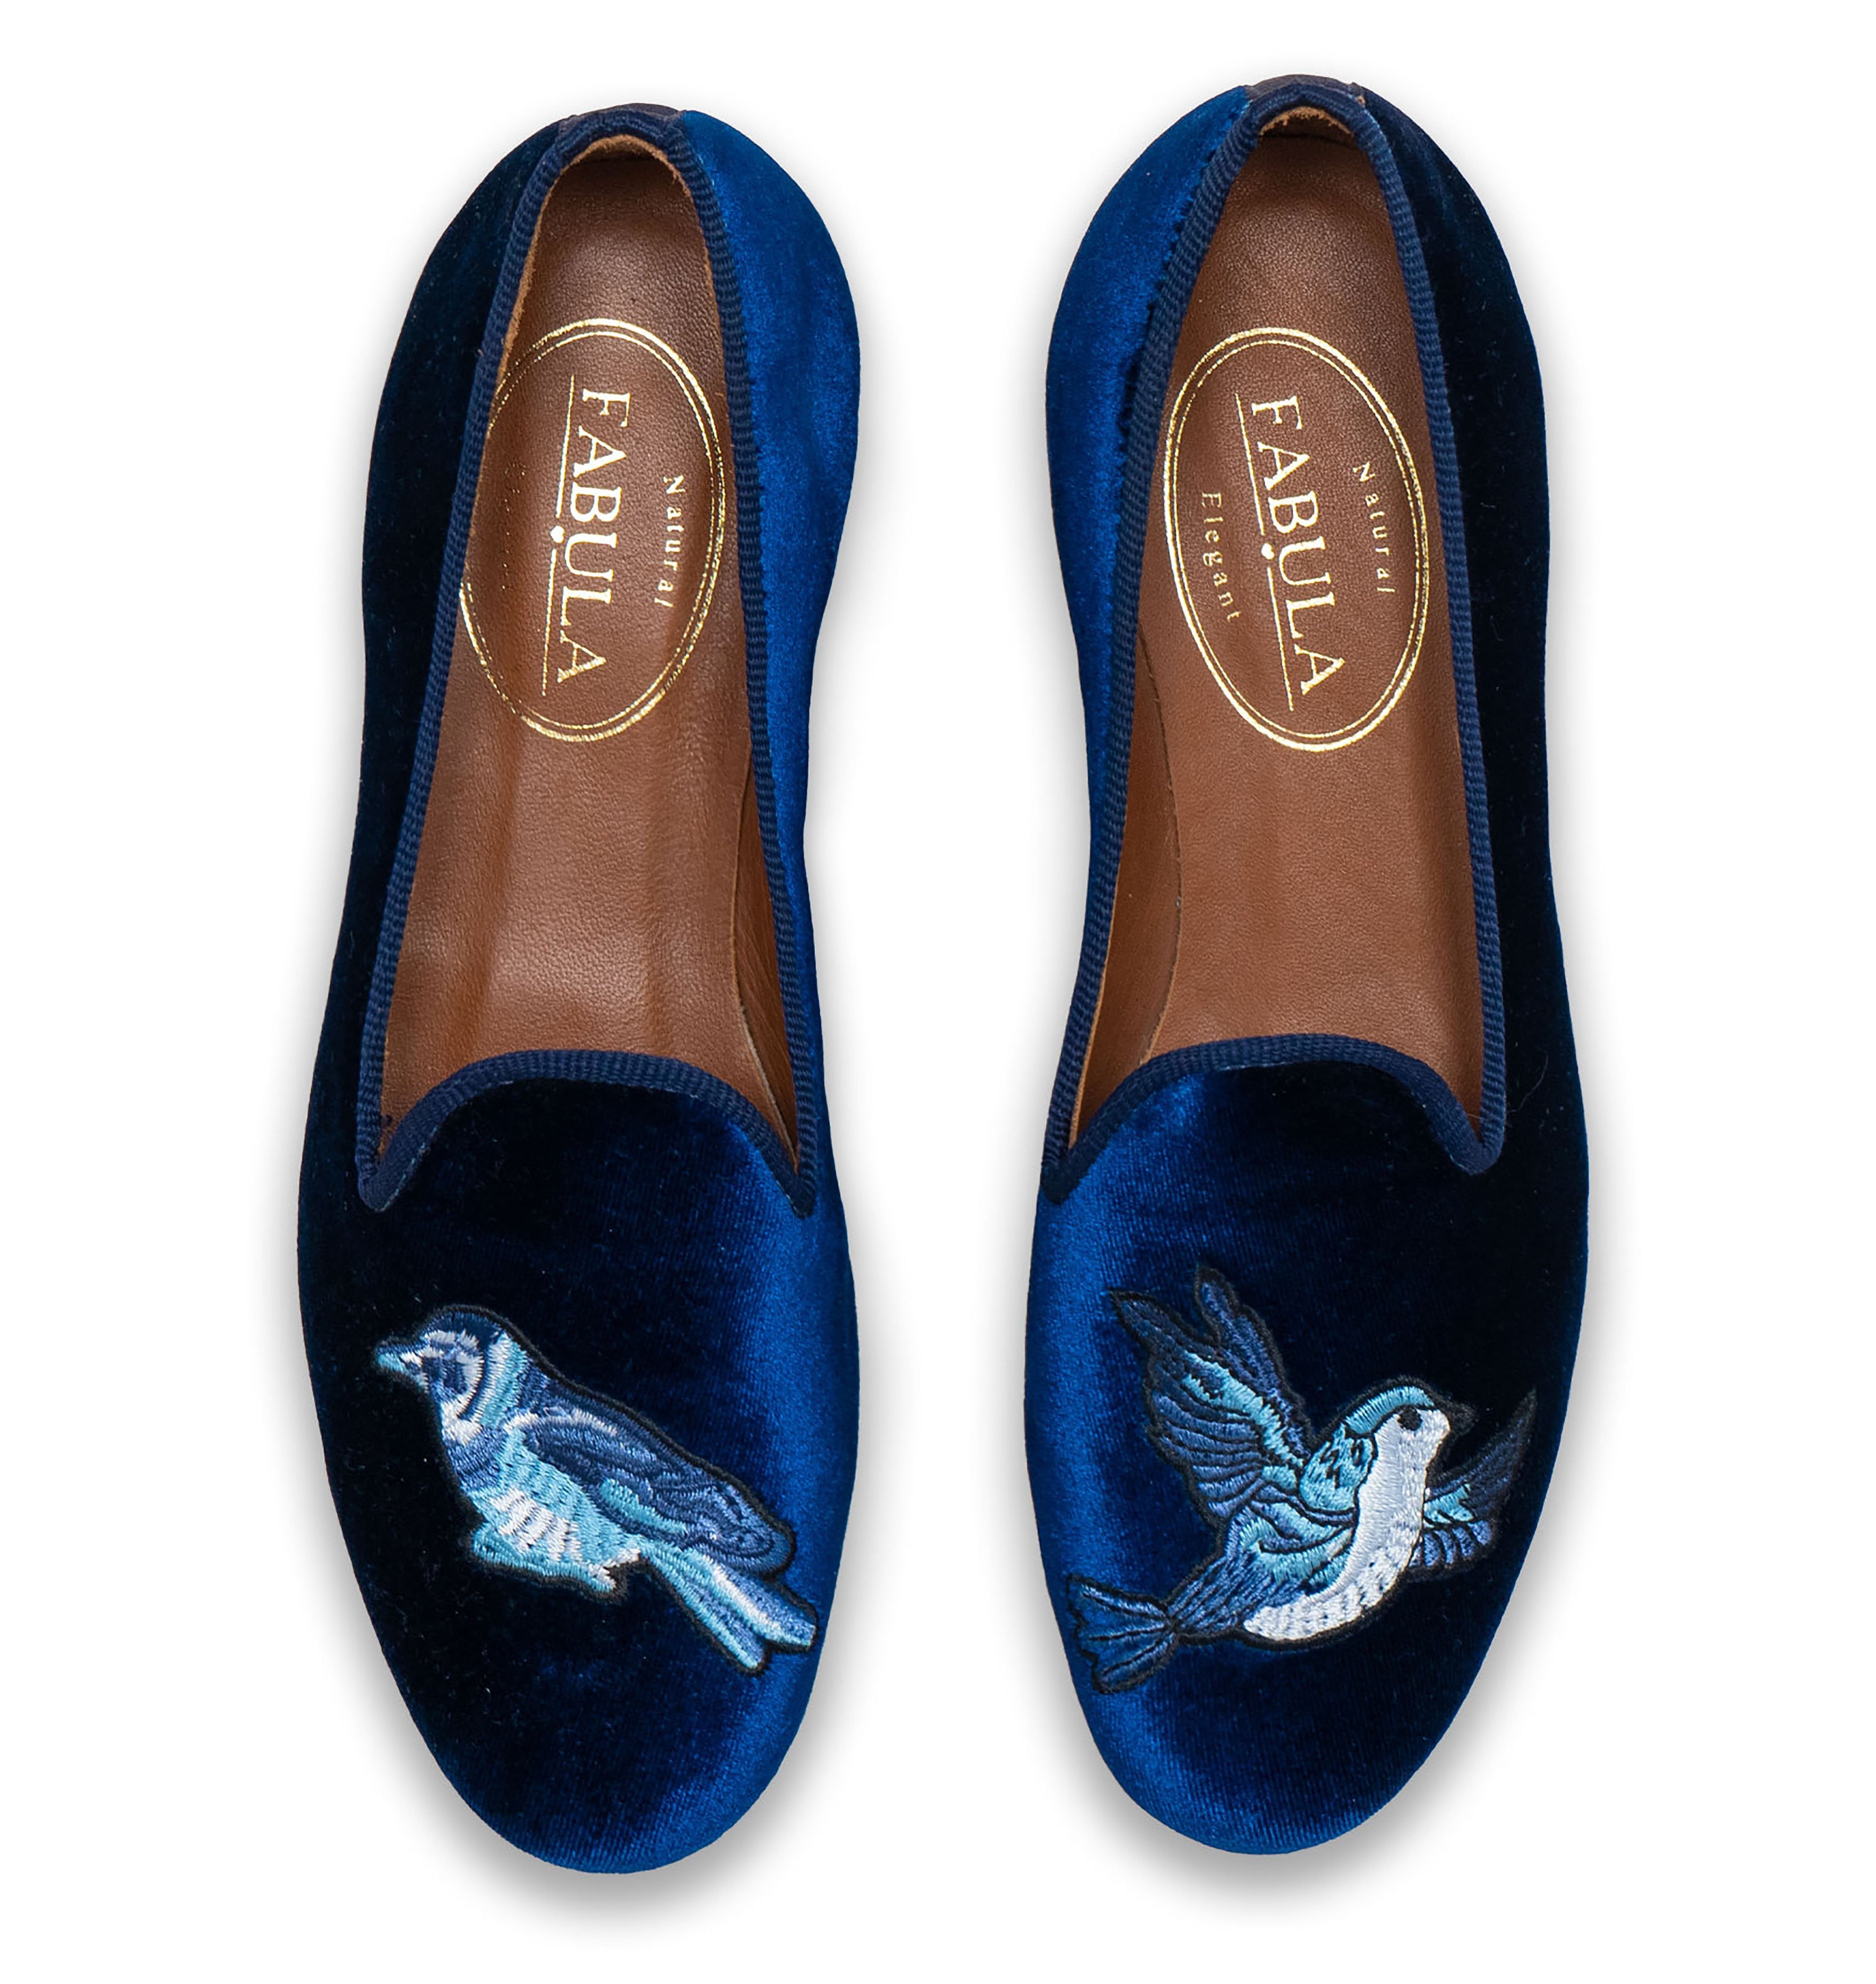 handmade navy velvet slippers with a blue bird embroidery